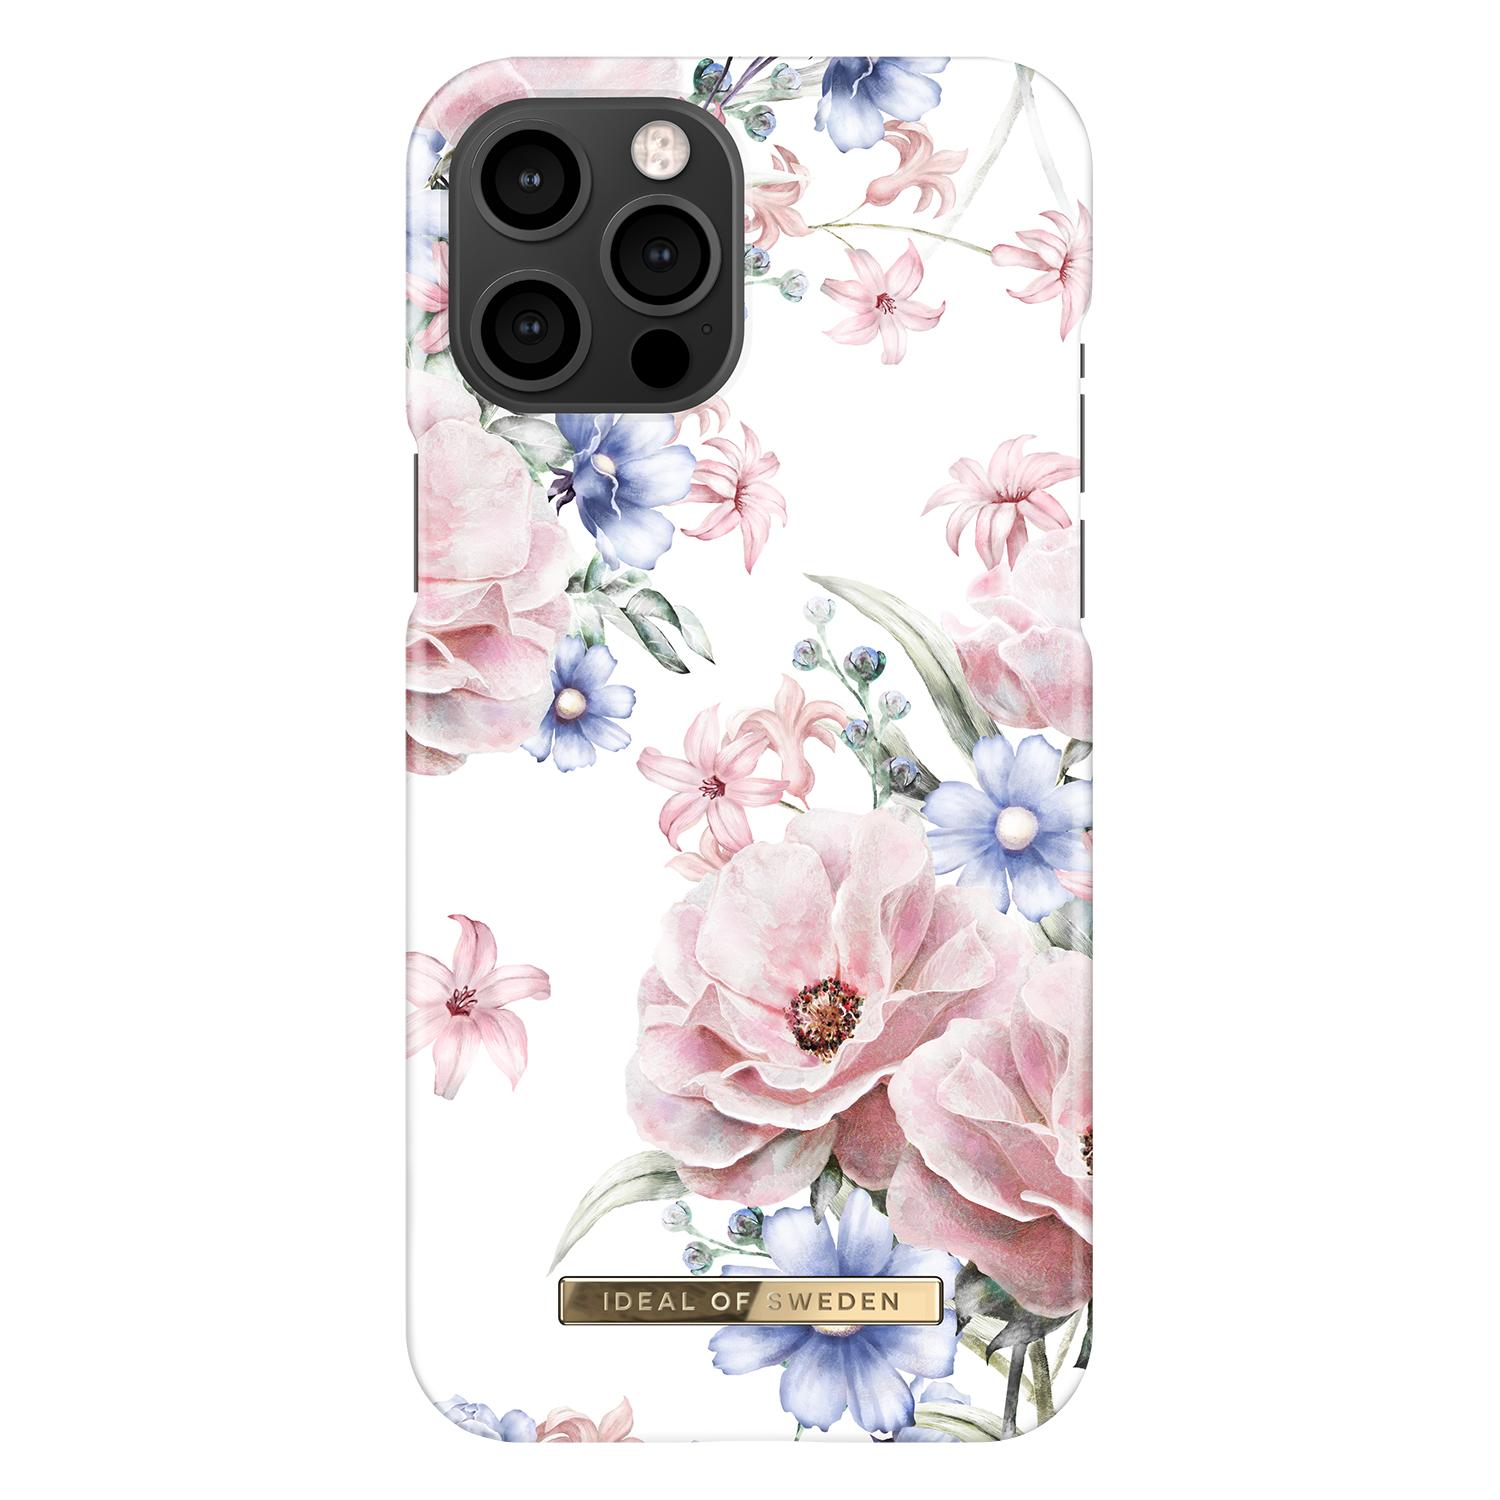 iPhone 12 Pro Max Fashion Case Floral Romance